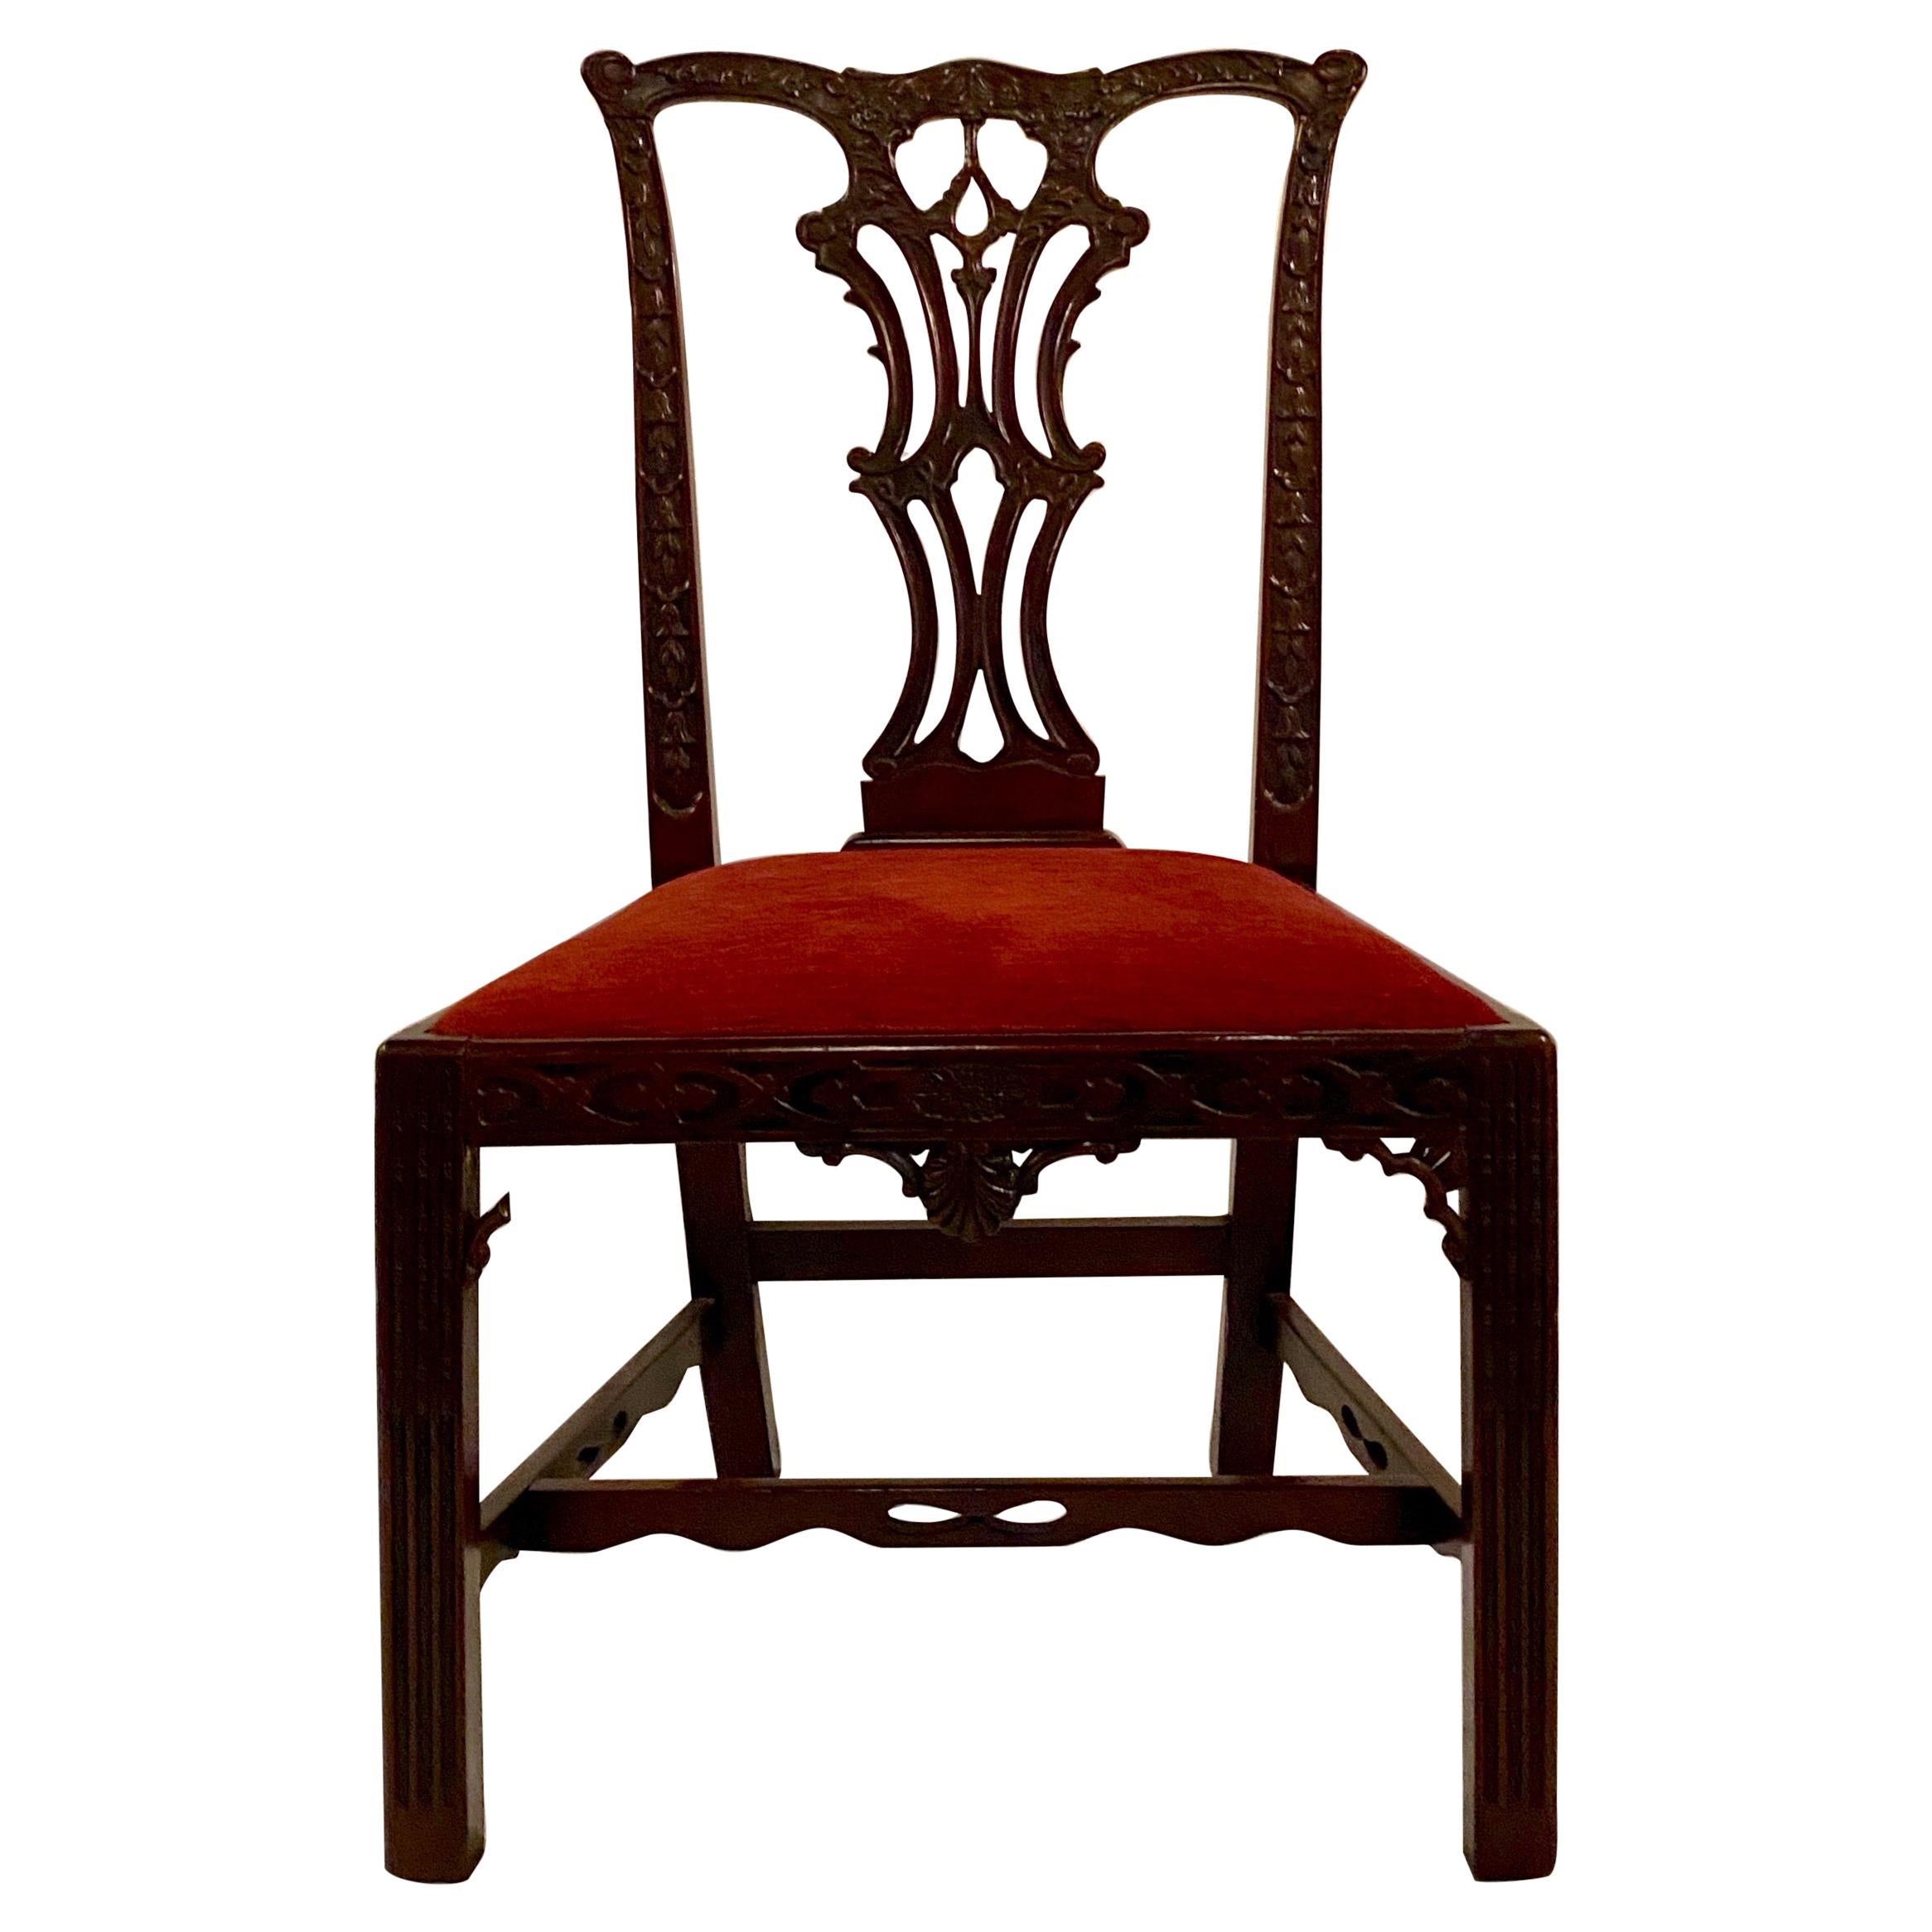 Antique English Mahogany Chair Fretwork Design Chippendale, circa 1870-1880